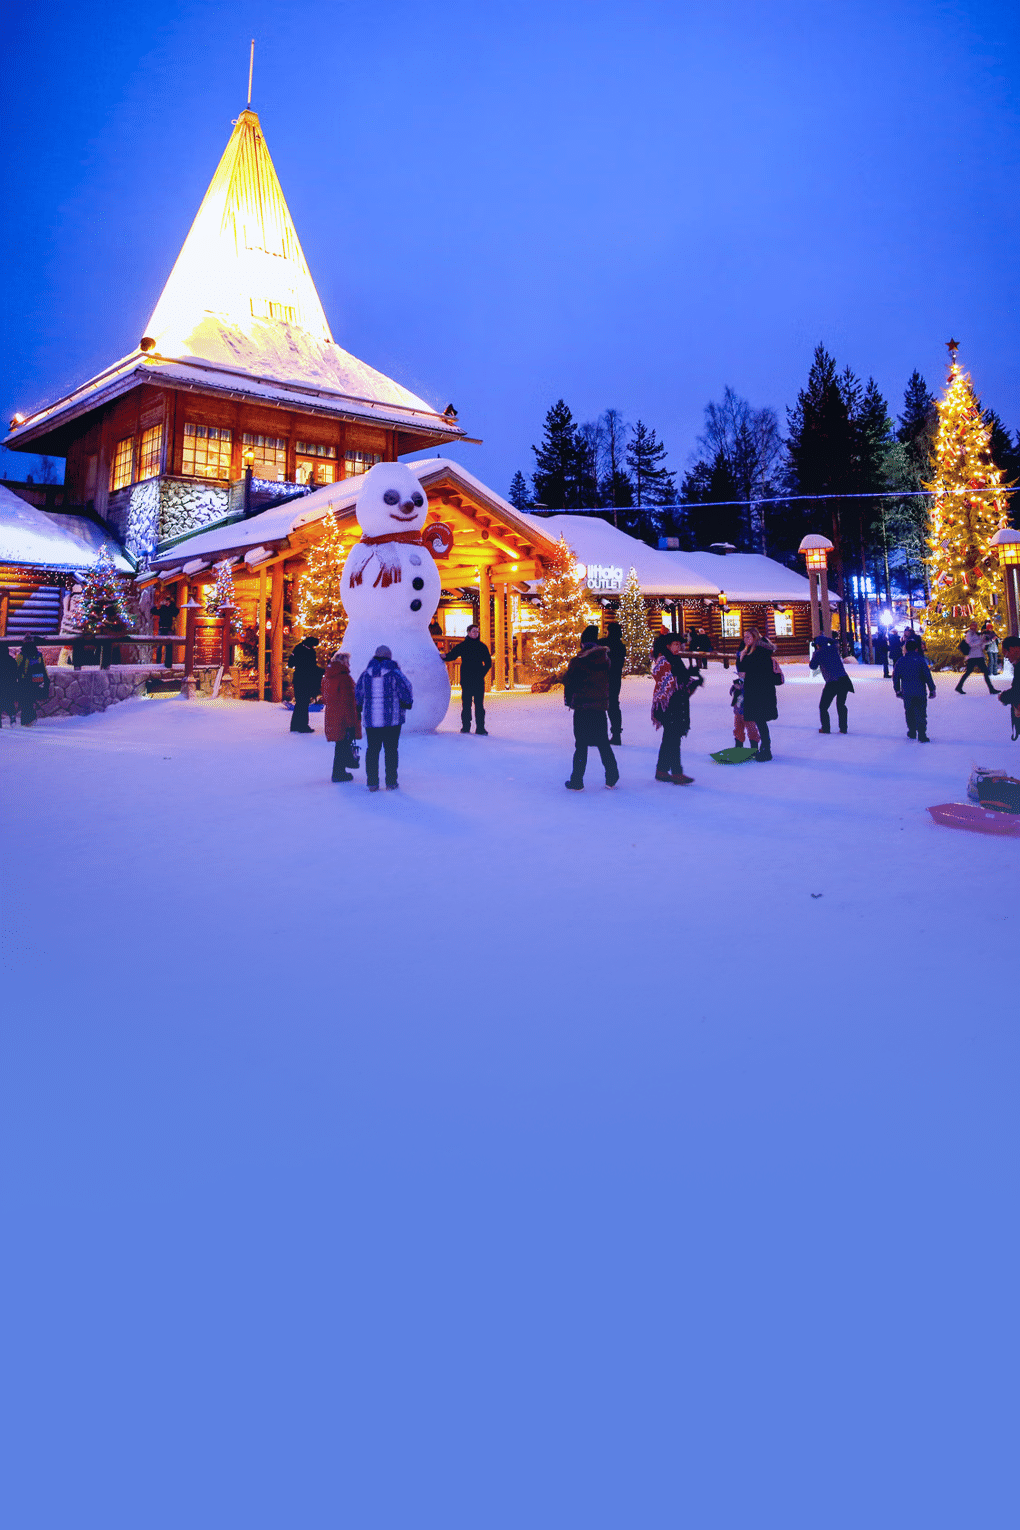 Finland Wonders with FREE Visit to Santa Claus Village